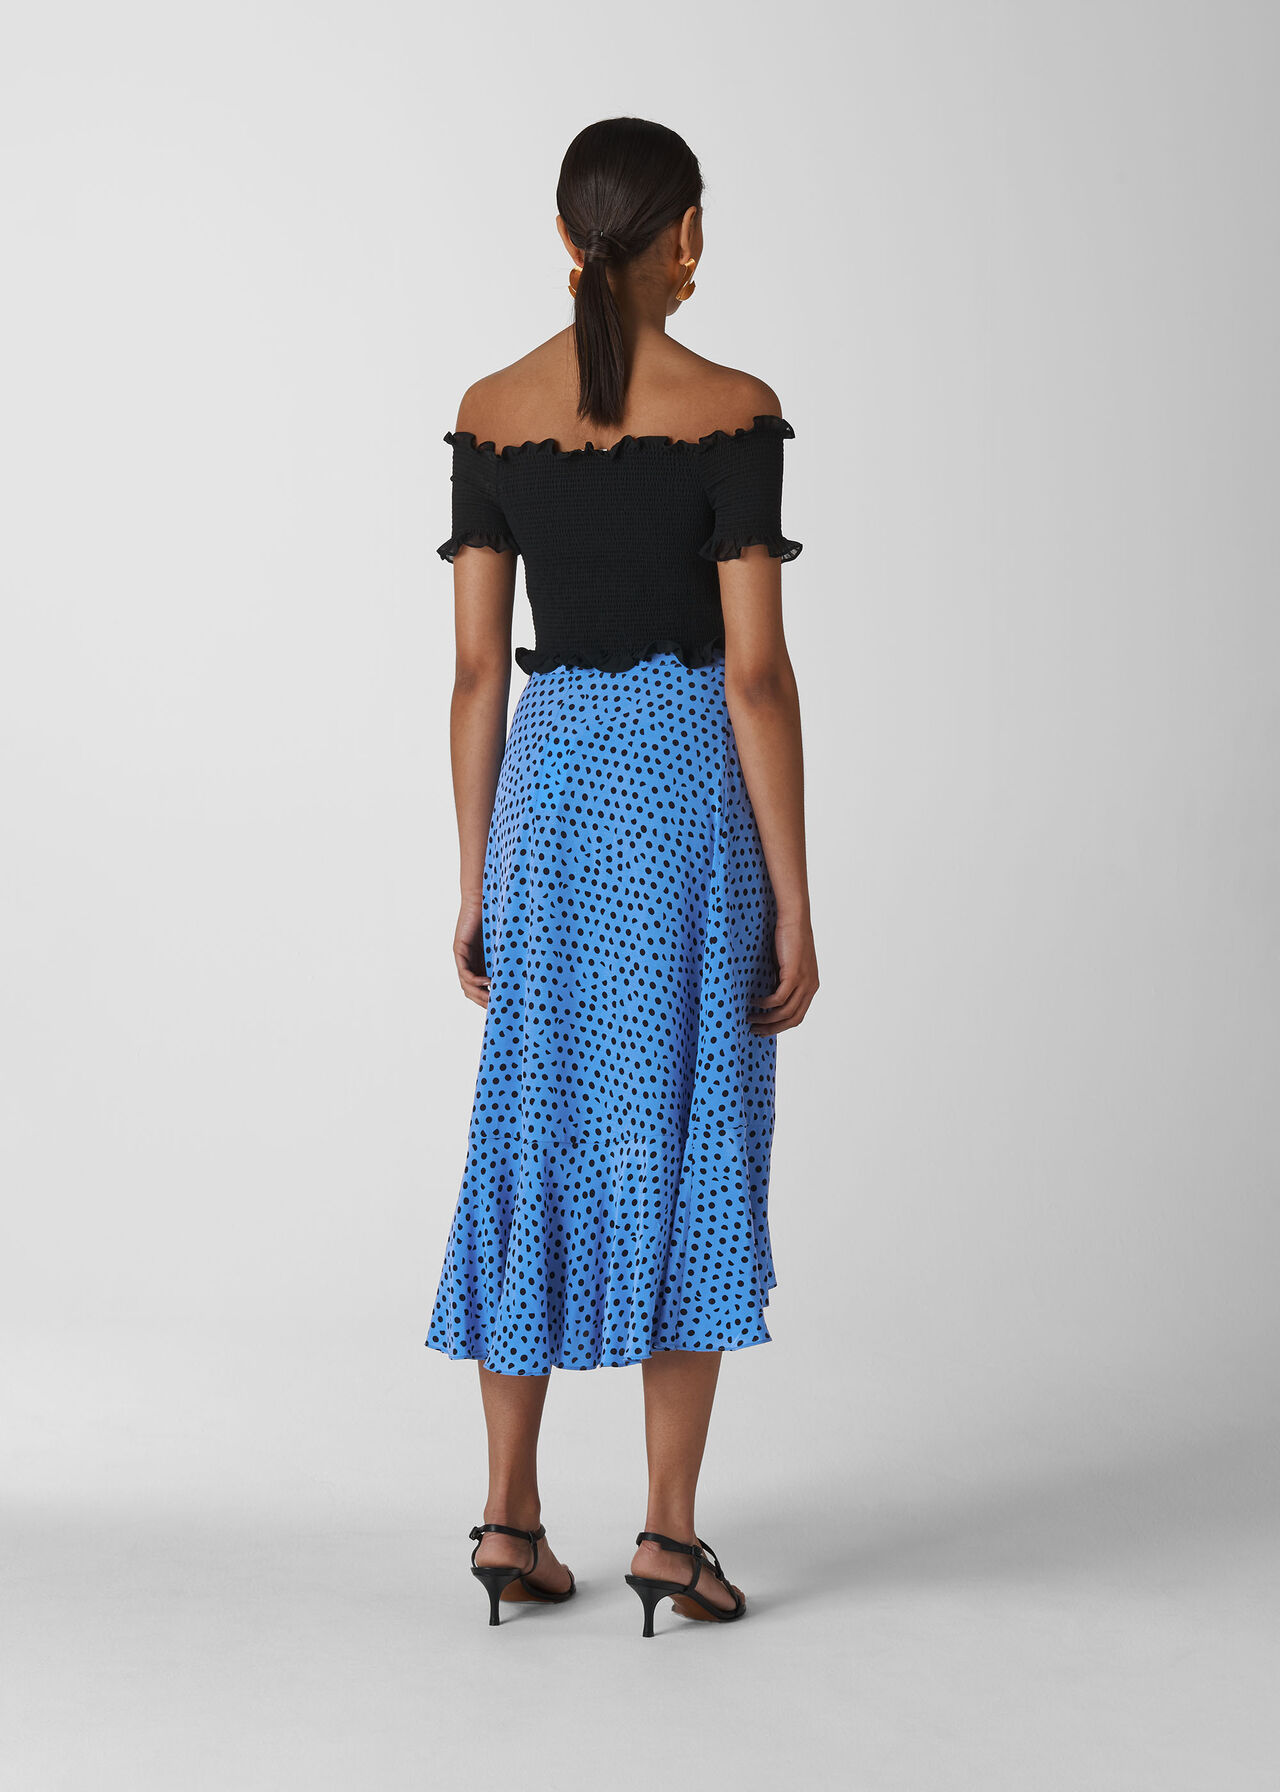 Lunar Spot Wrap Skirt Blue/Multi